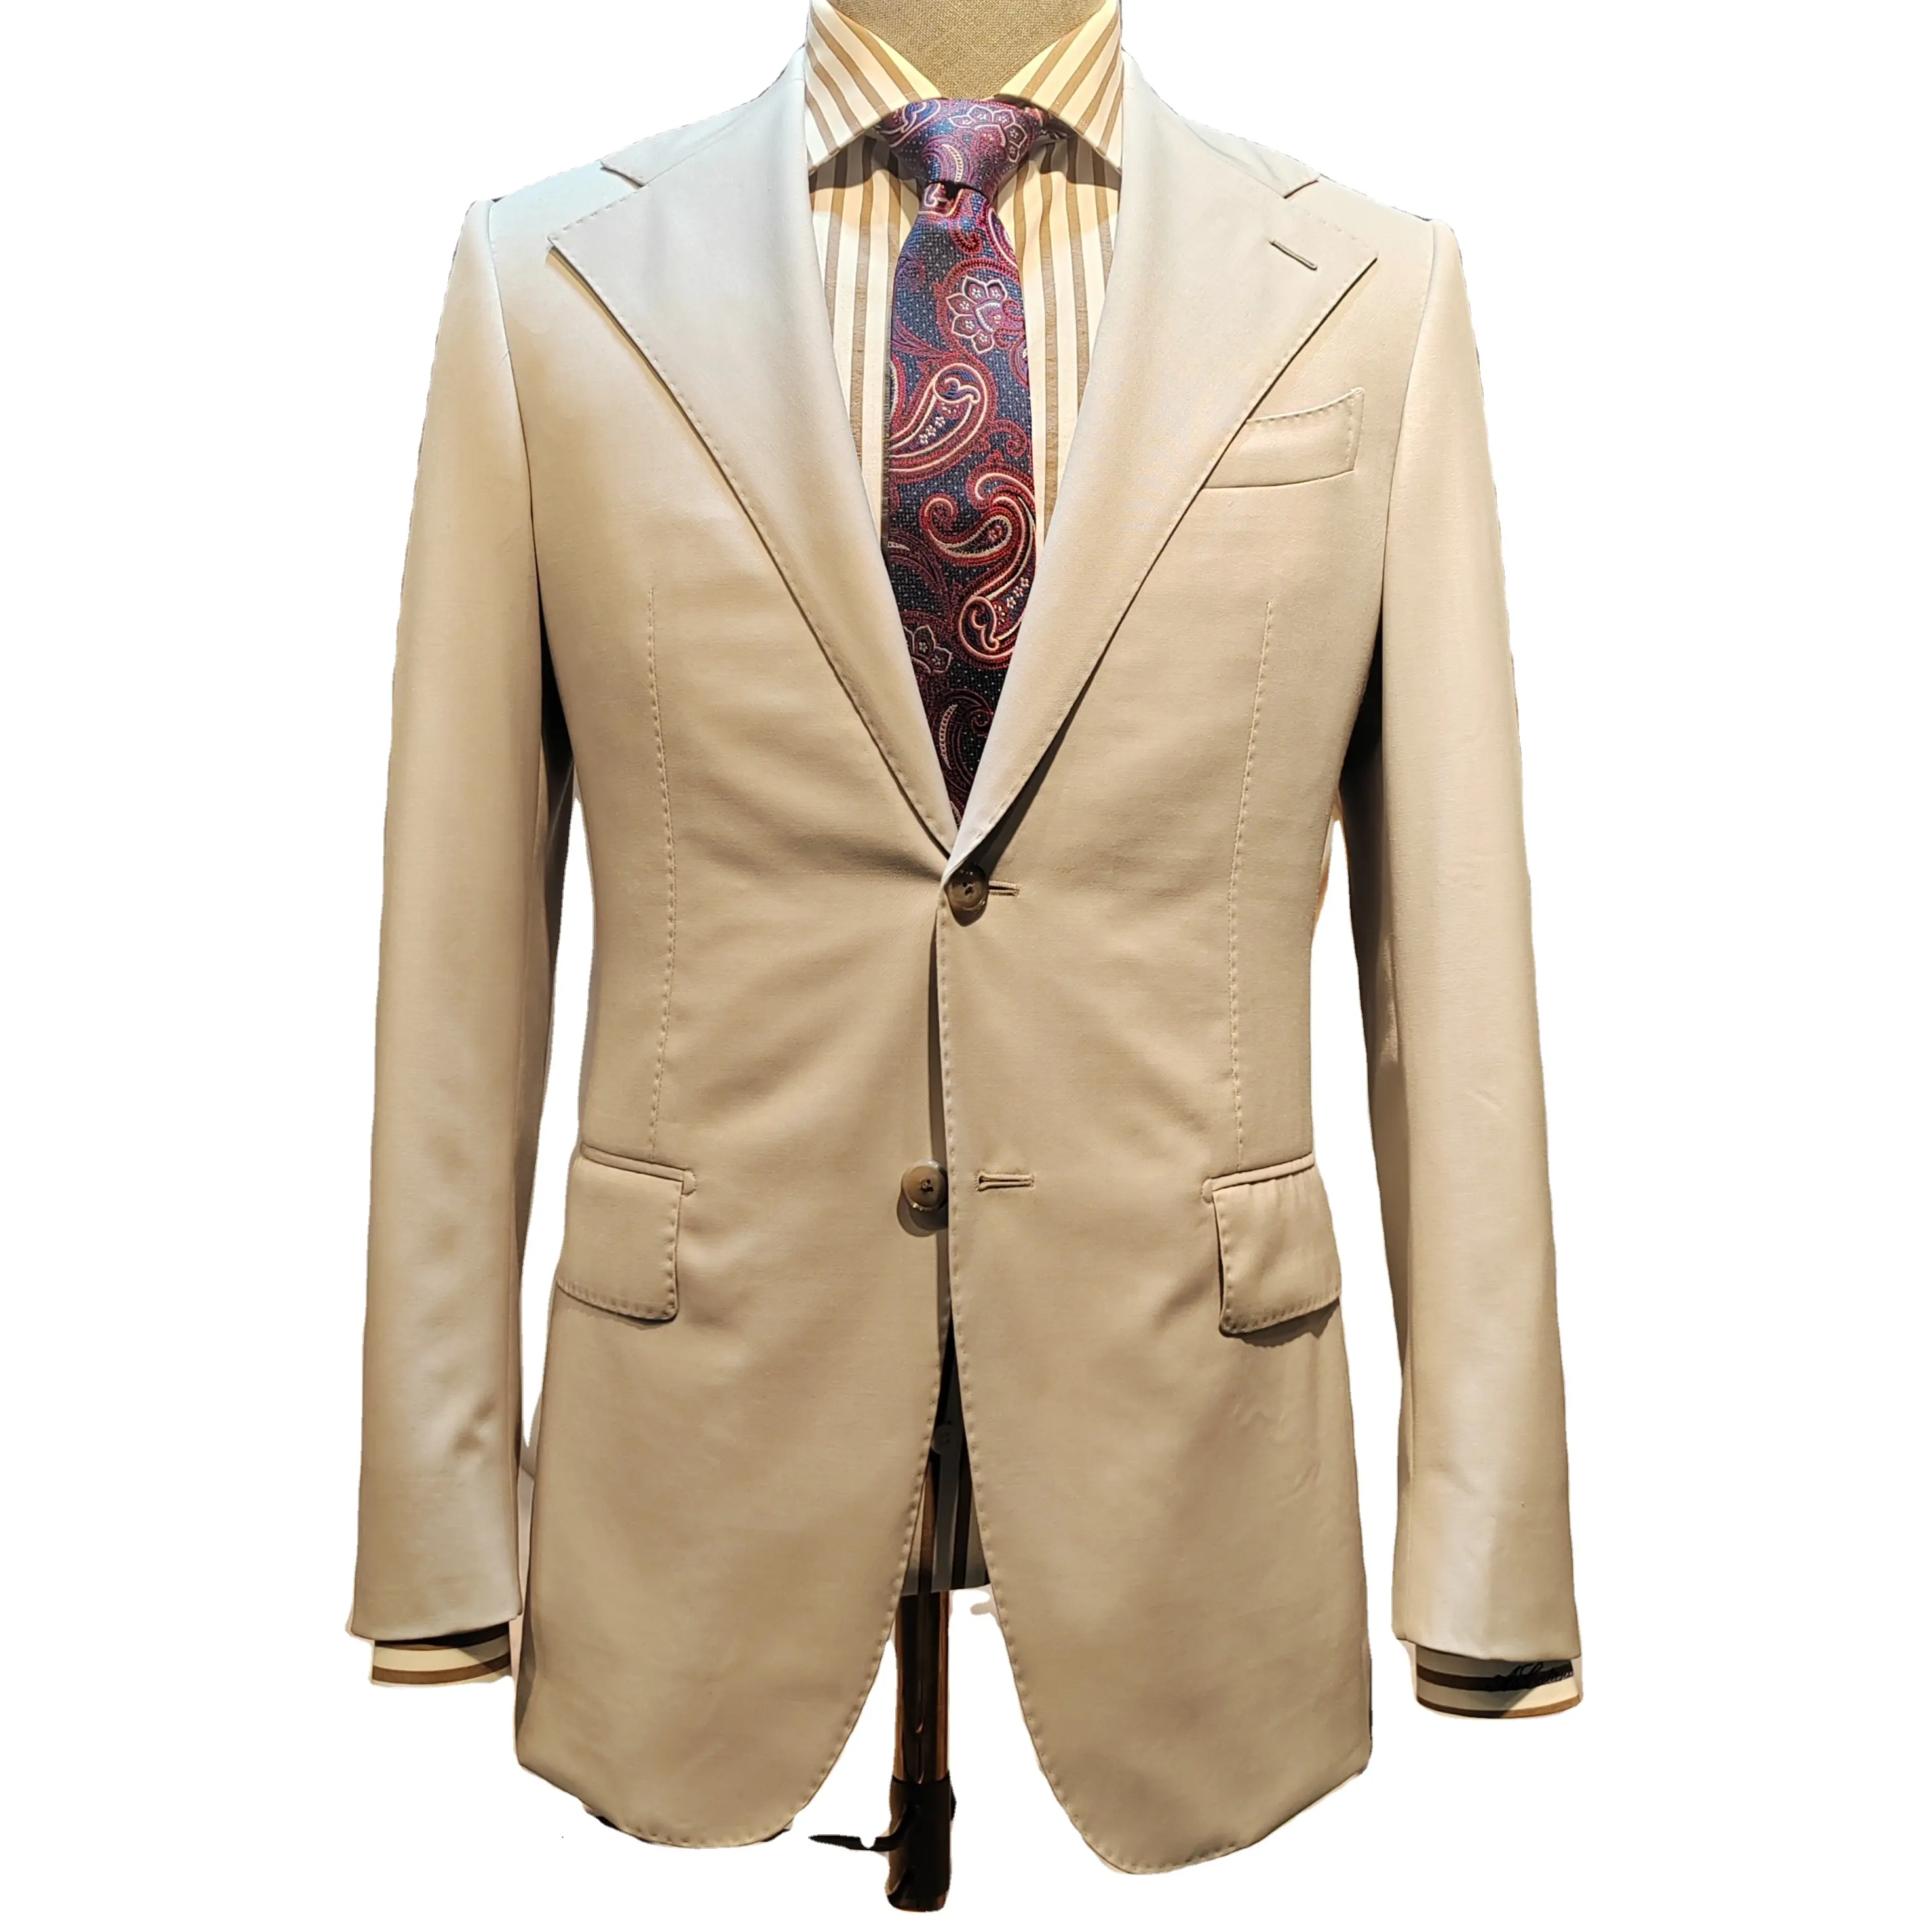 Classic Handmade Half Canvas 100% Wool Suit British Bespoke 2 Piece Custom suits For Tailor Shop